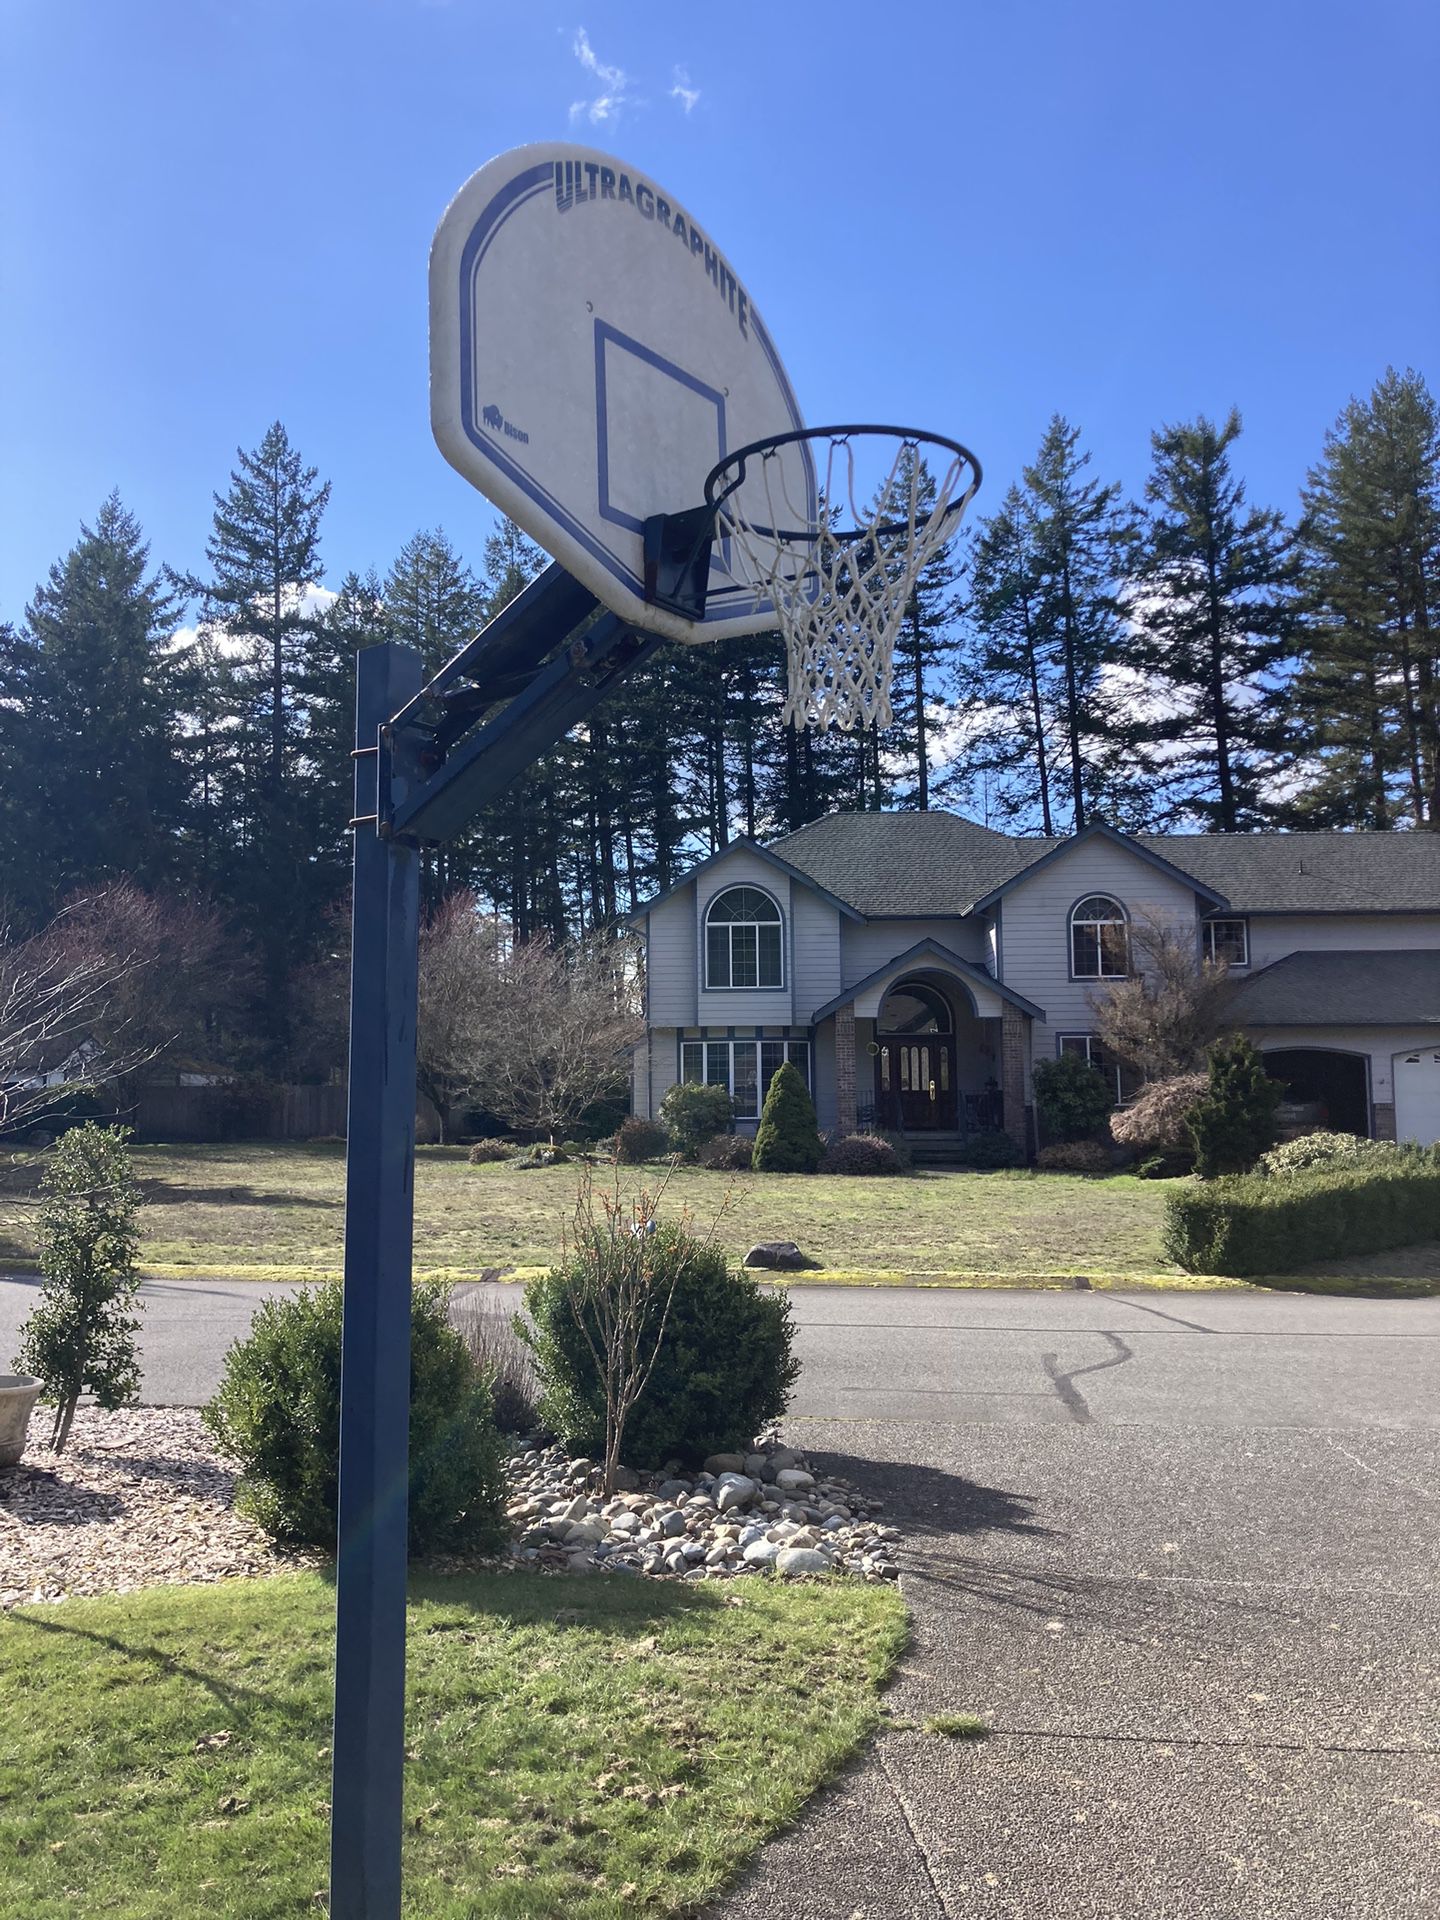 In Ground Adjustable Basketball Hoop